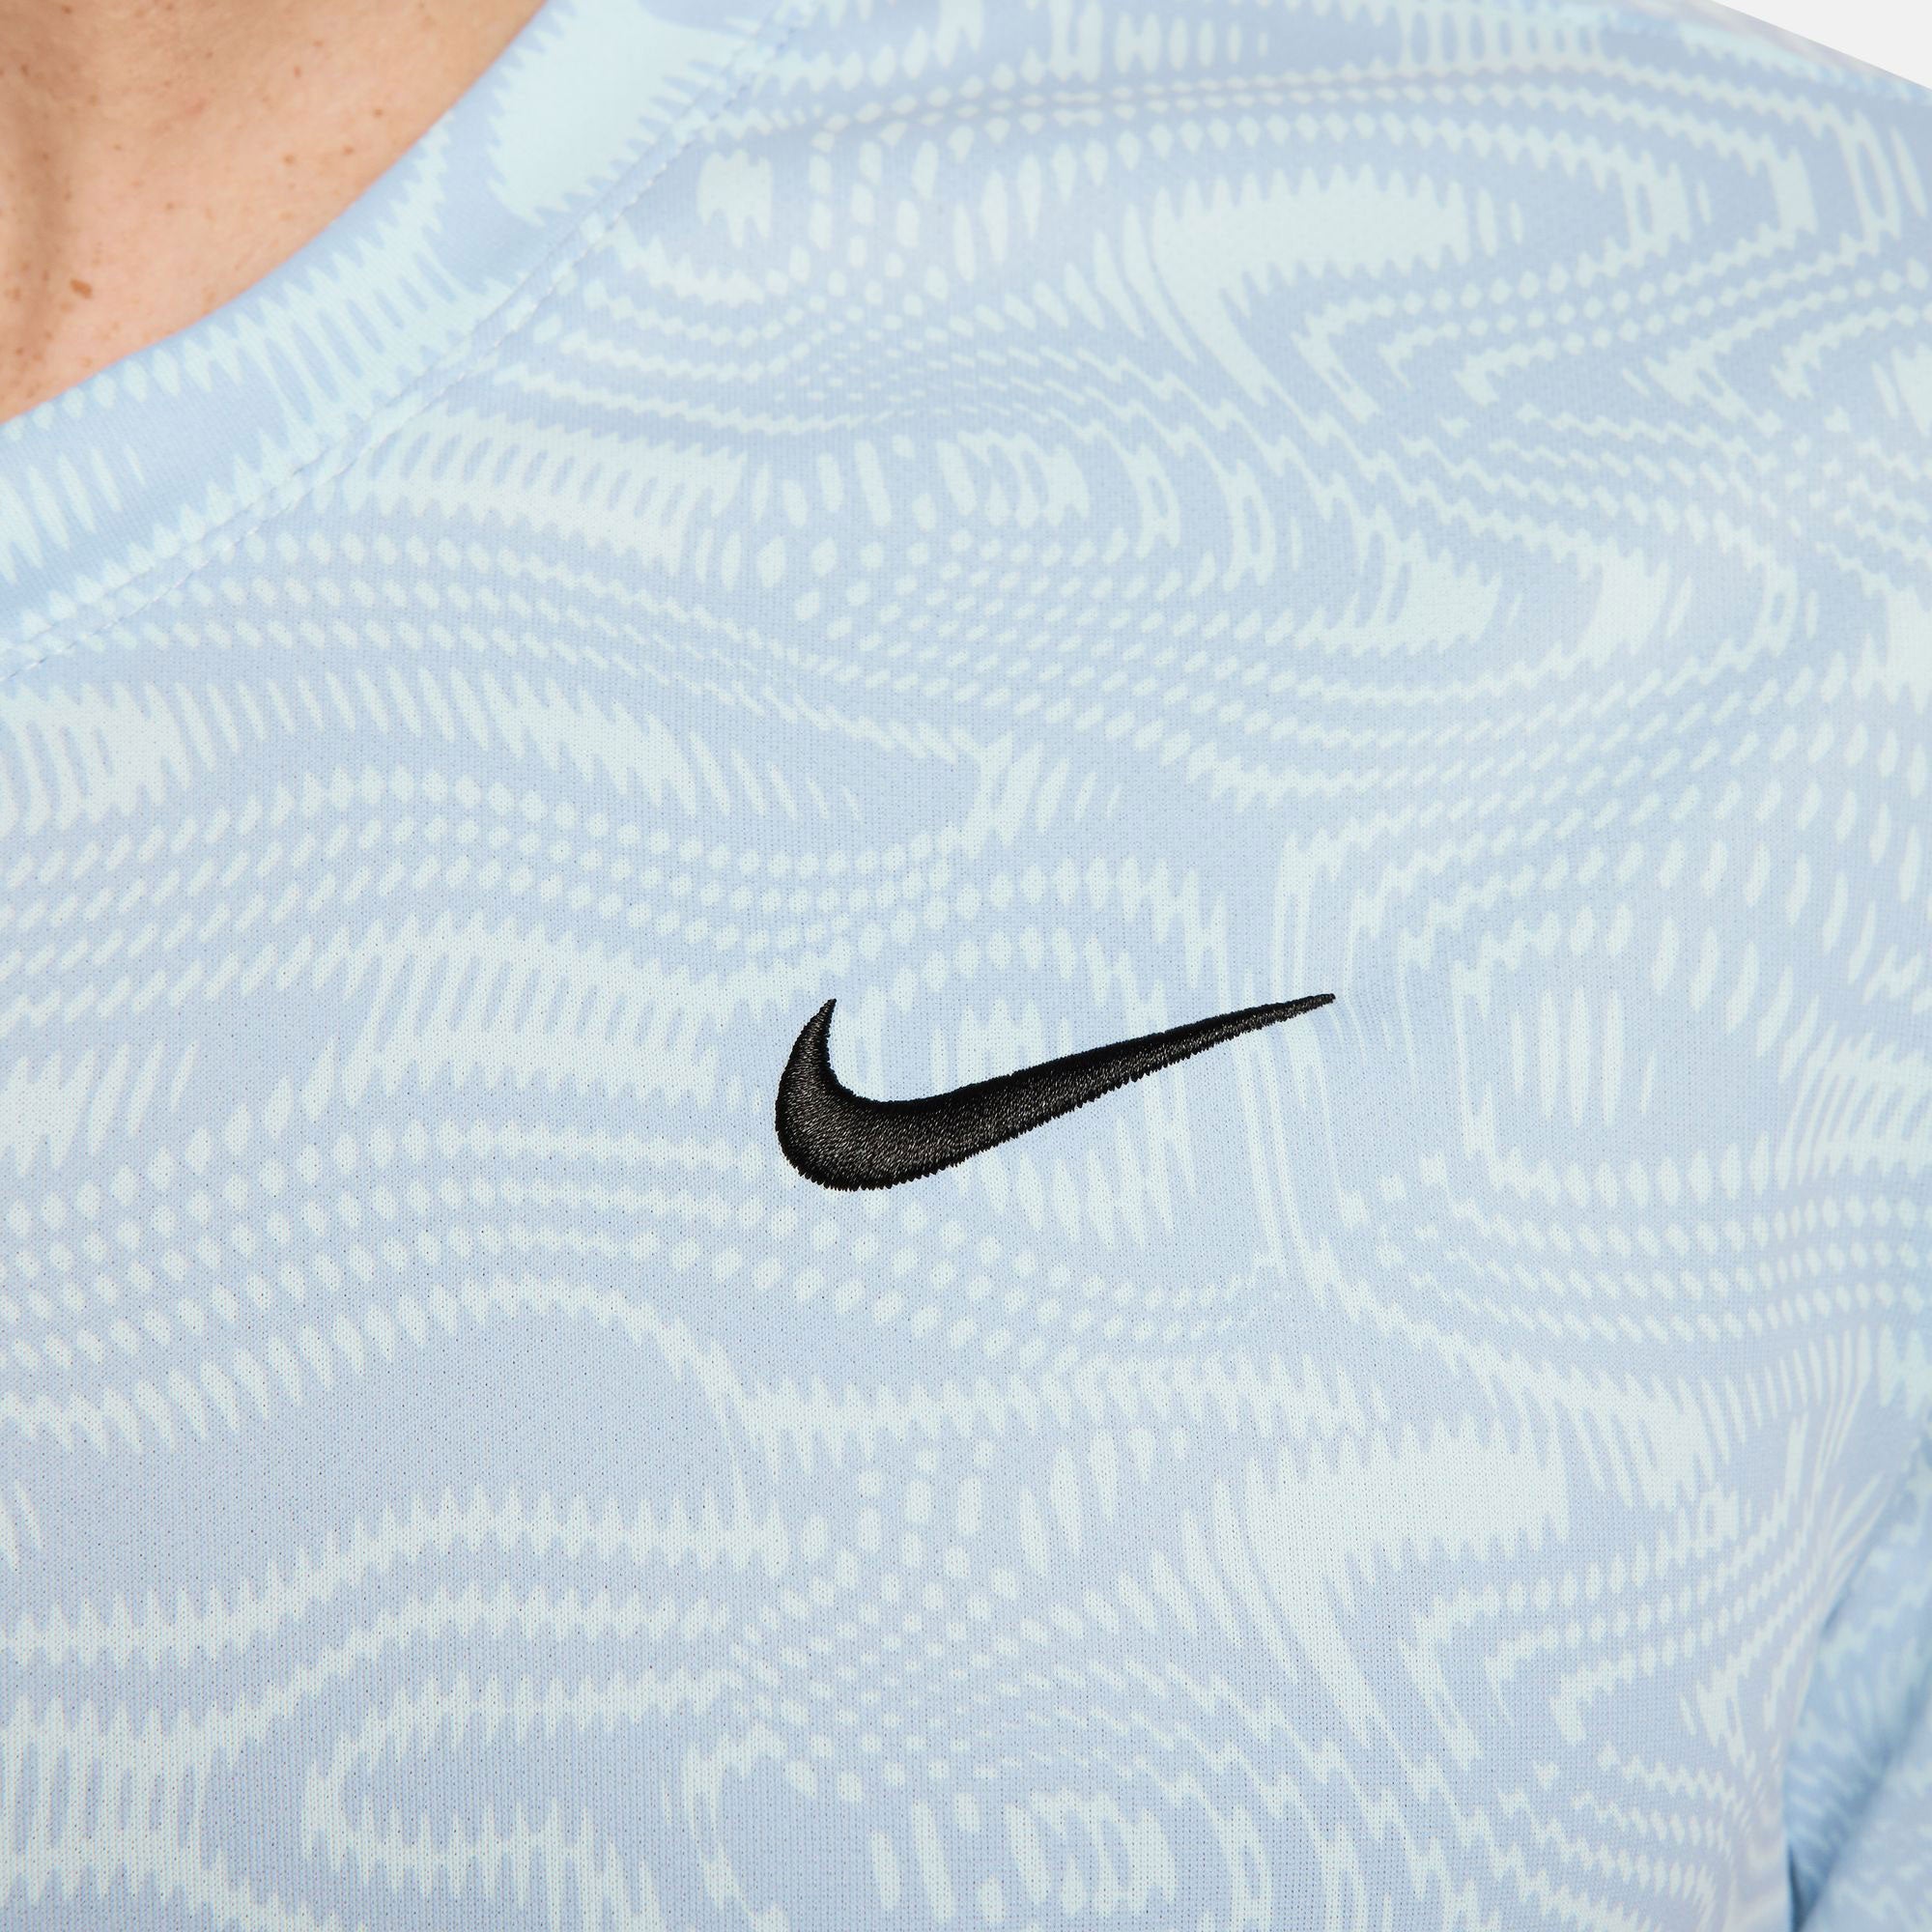 NikeCourt Victory Men's Dri-FIT Printed Tennis Shirt - Blue (4)